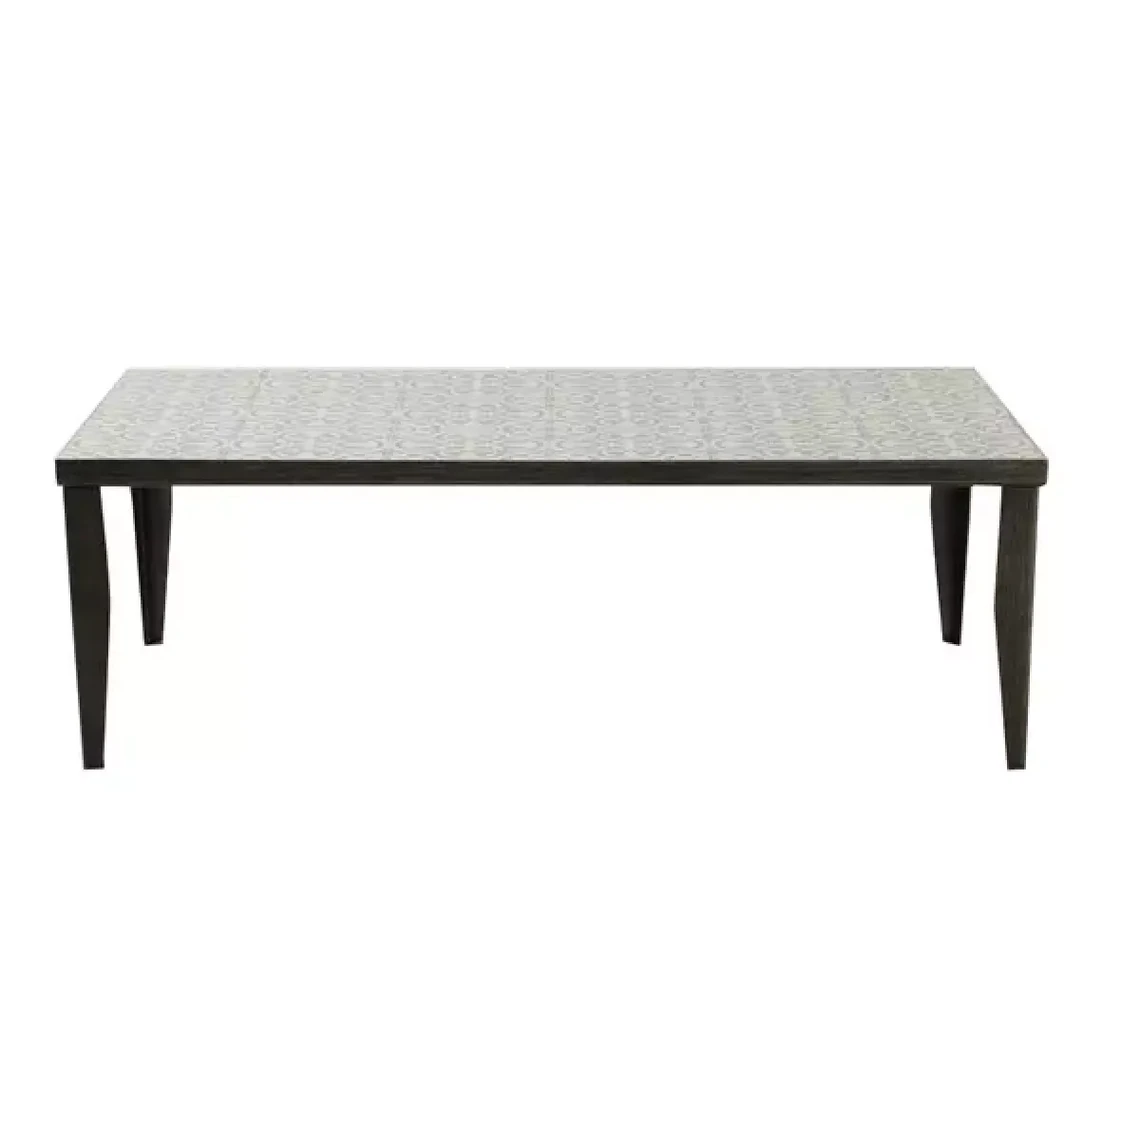 Table basse rectangulaire 120 cm gris